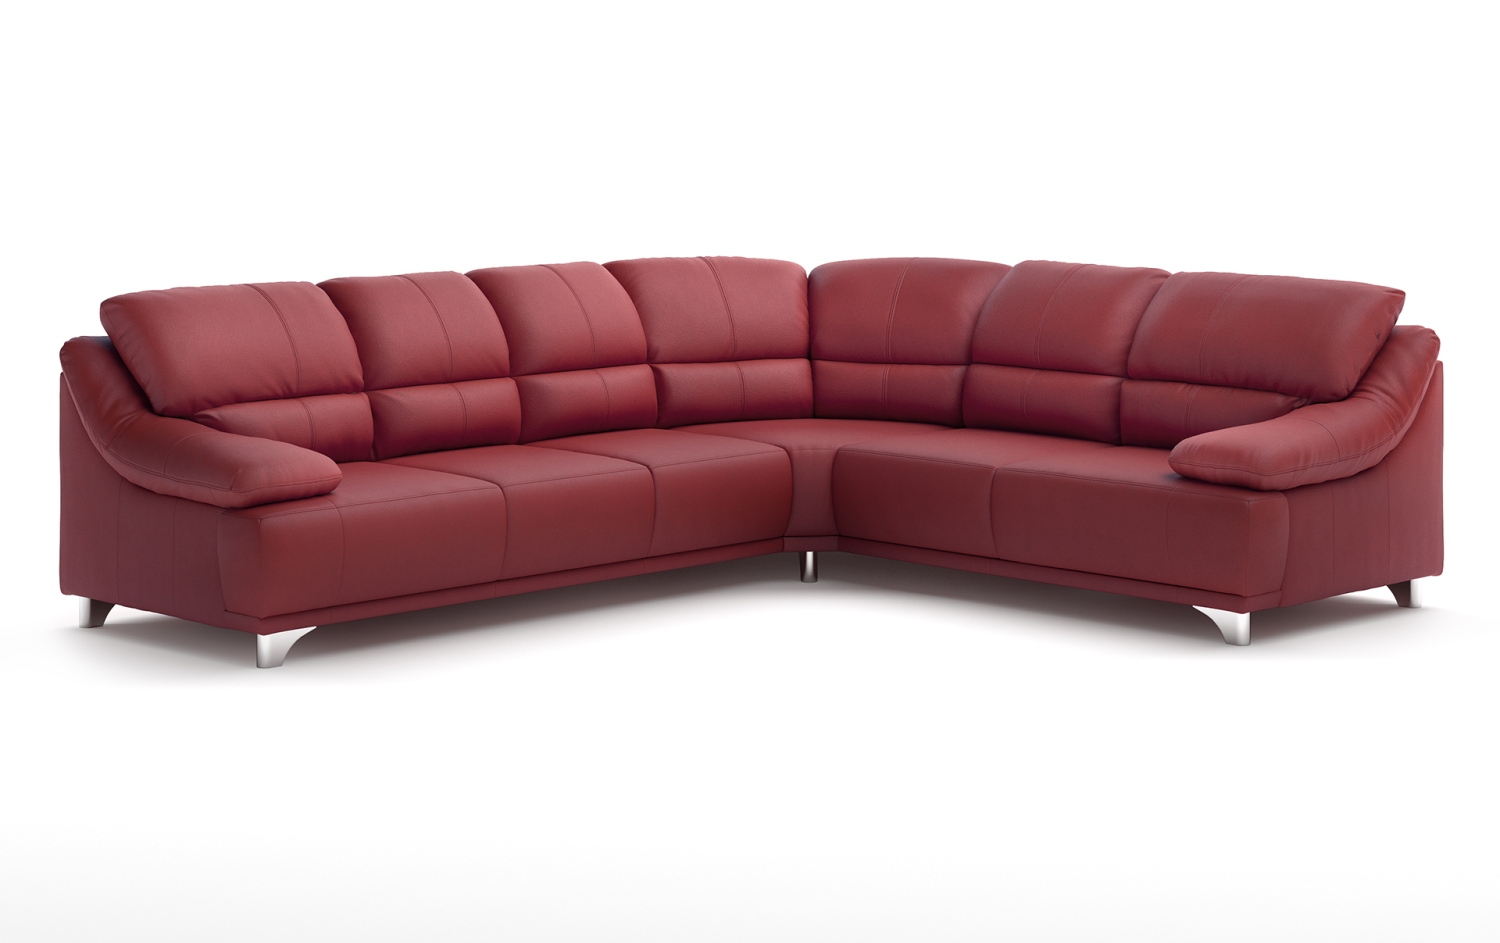 Red Sofa Silo Render